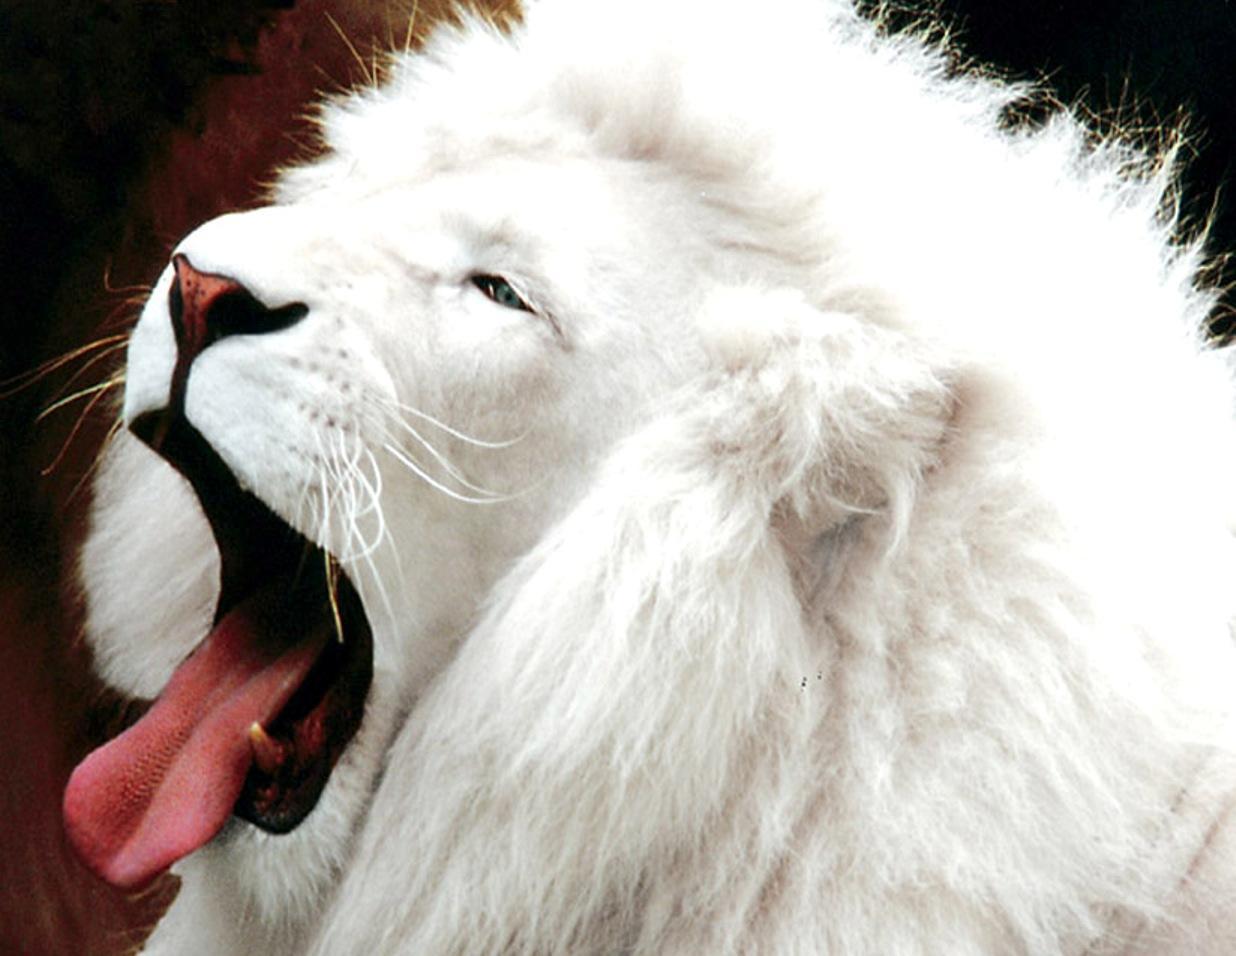 White Lion Image